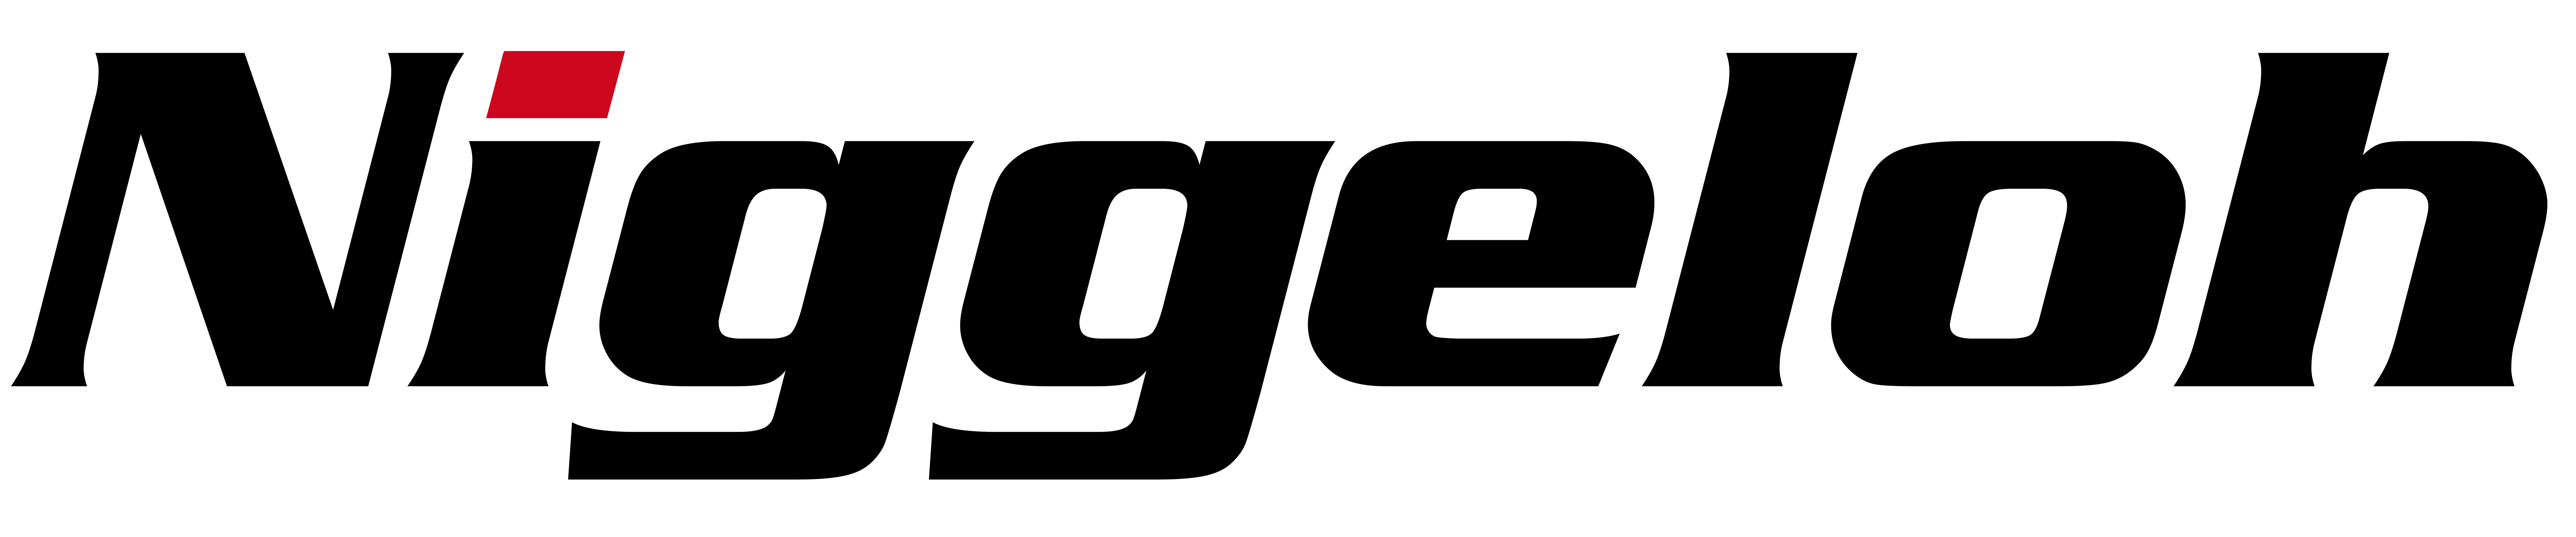 Logo Niggeloh.jpg